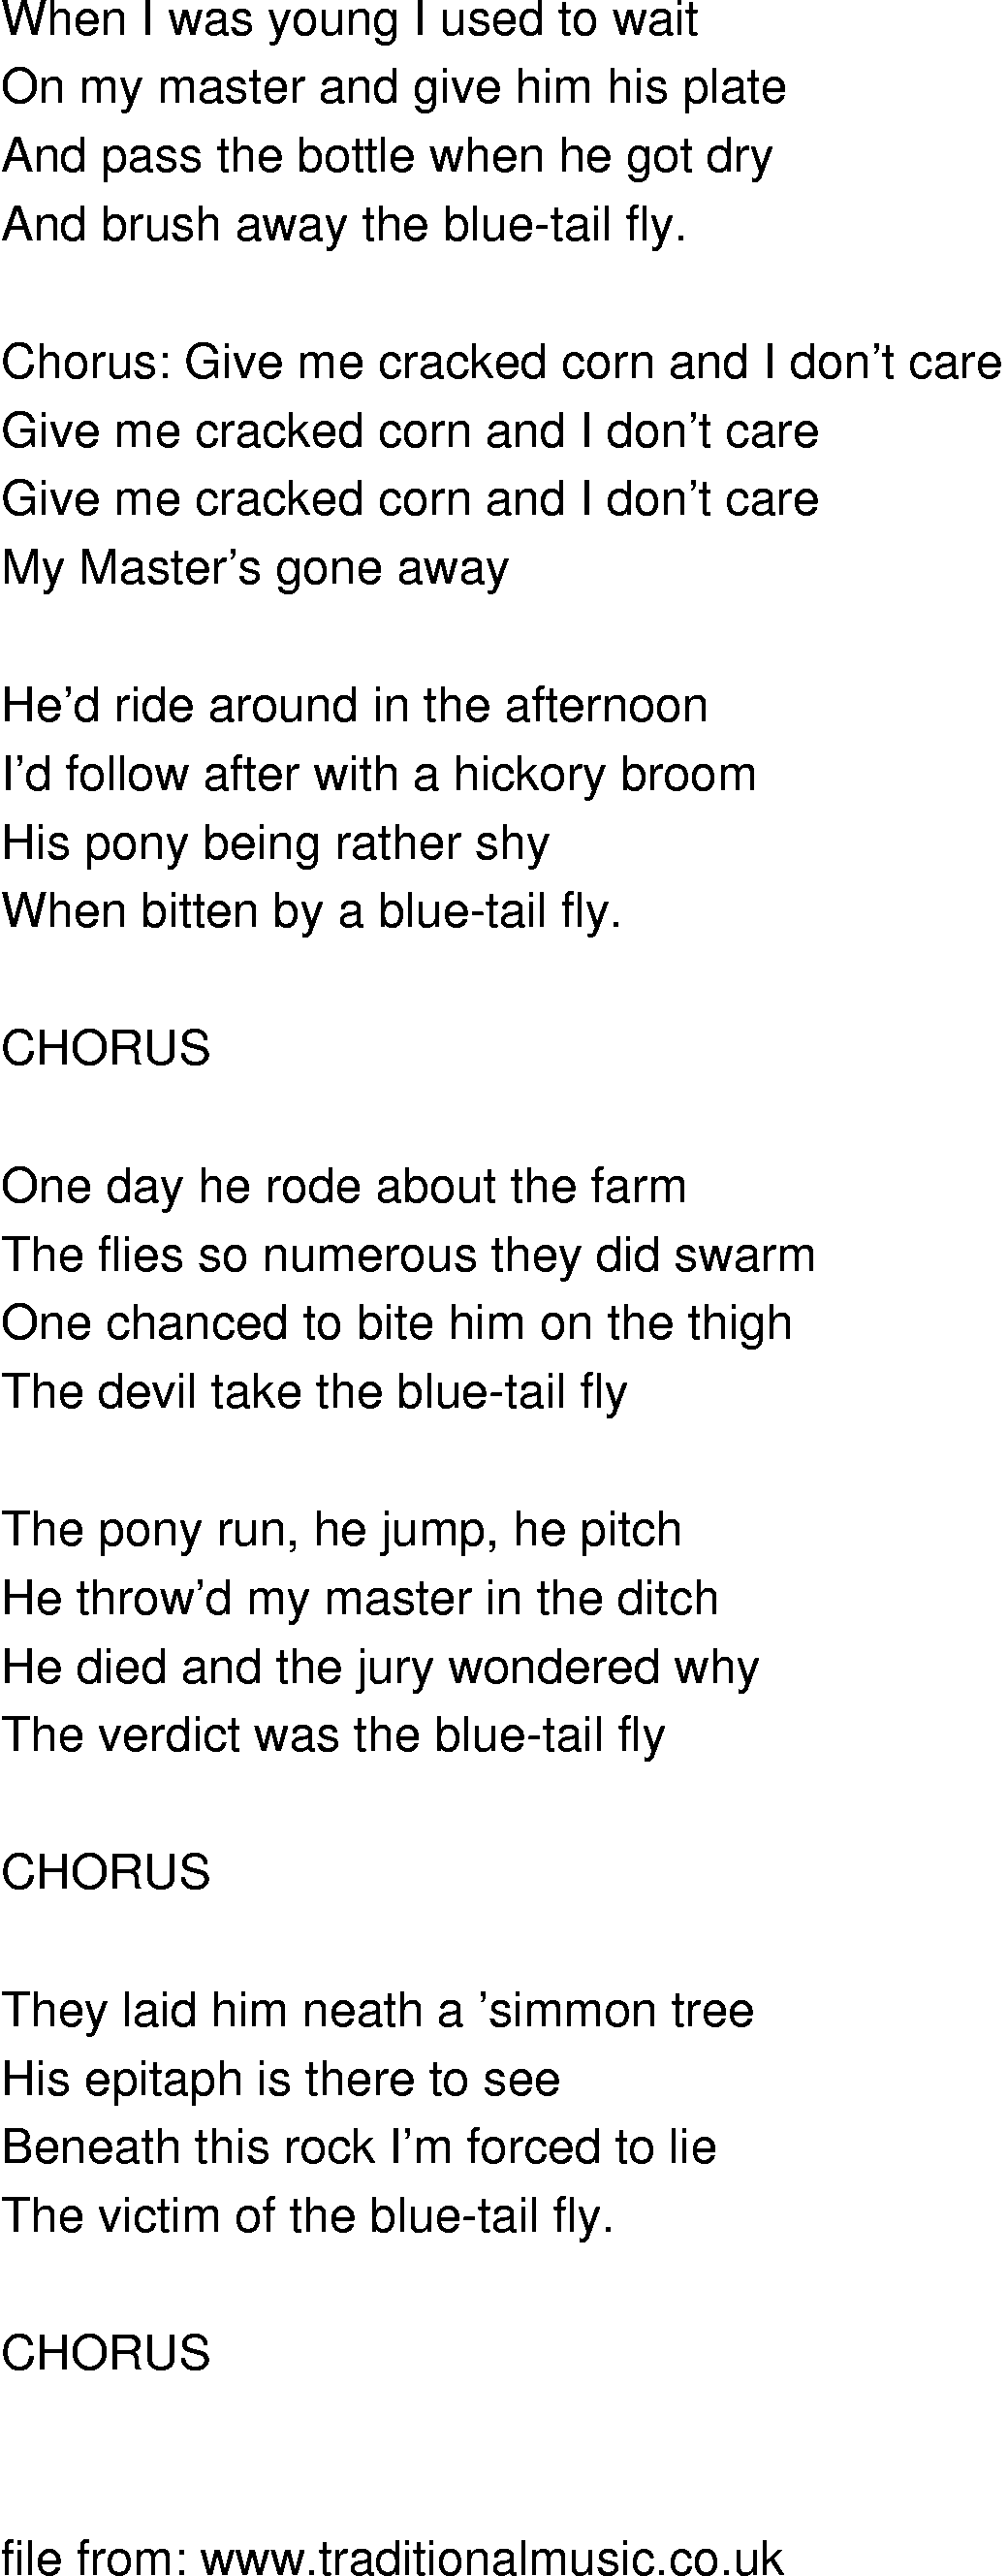 Old-Time (oldtimey) Song Lyrics - blue tailed fly